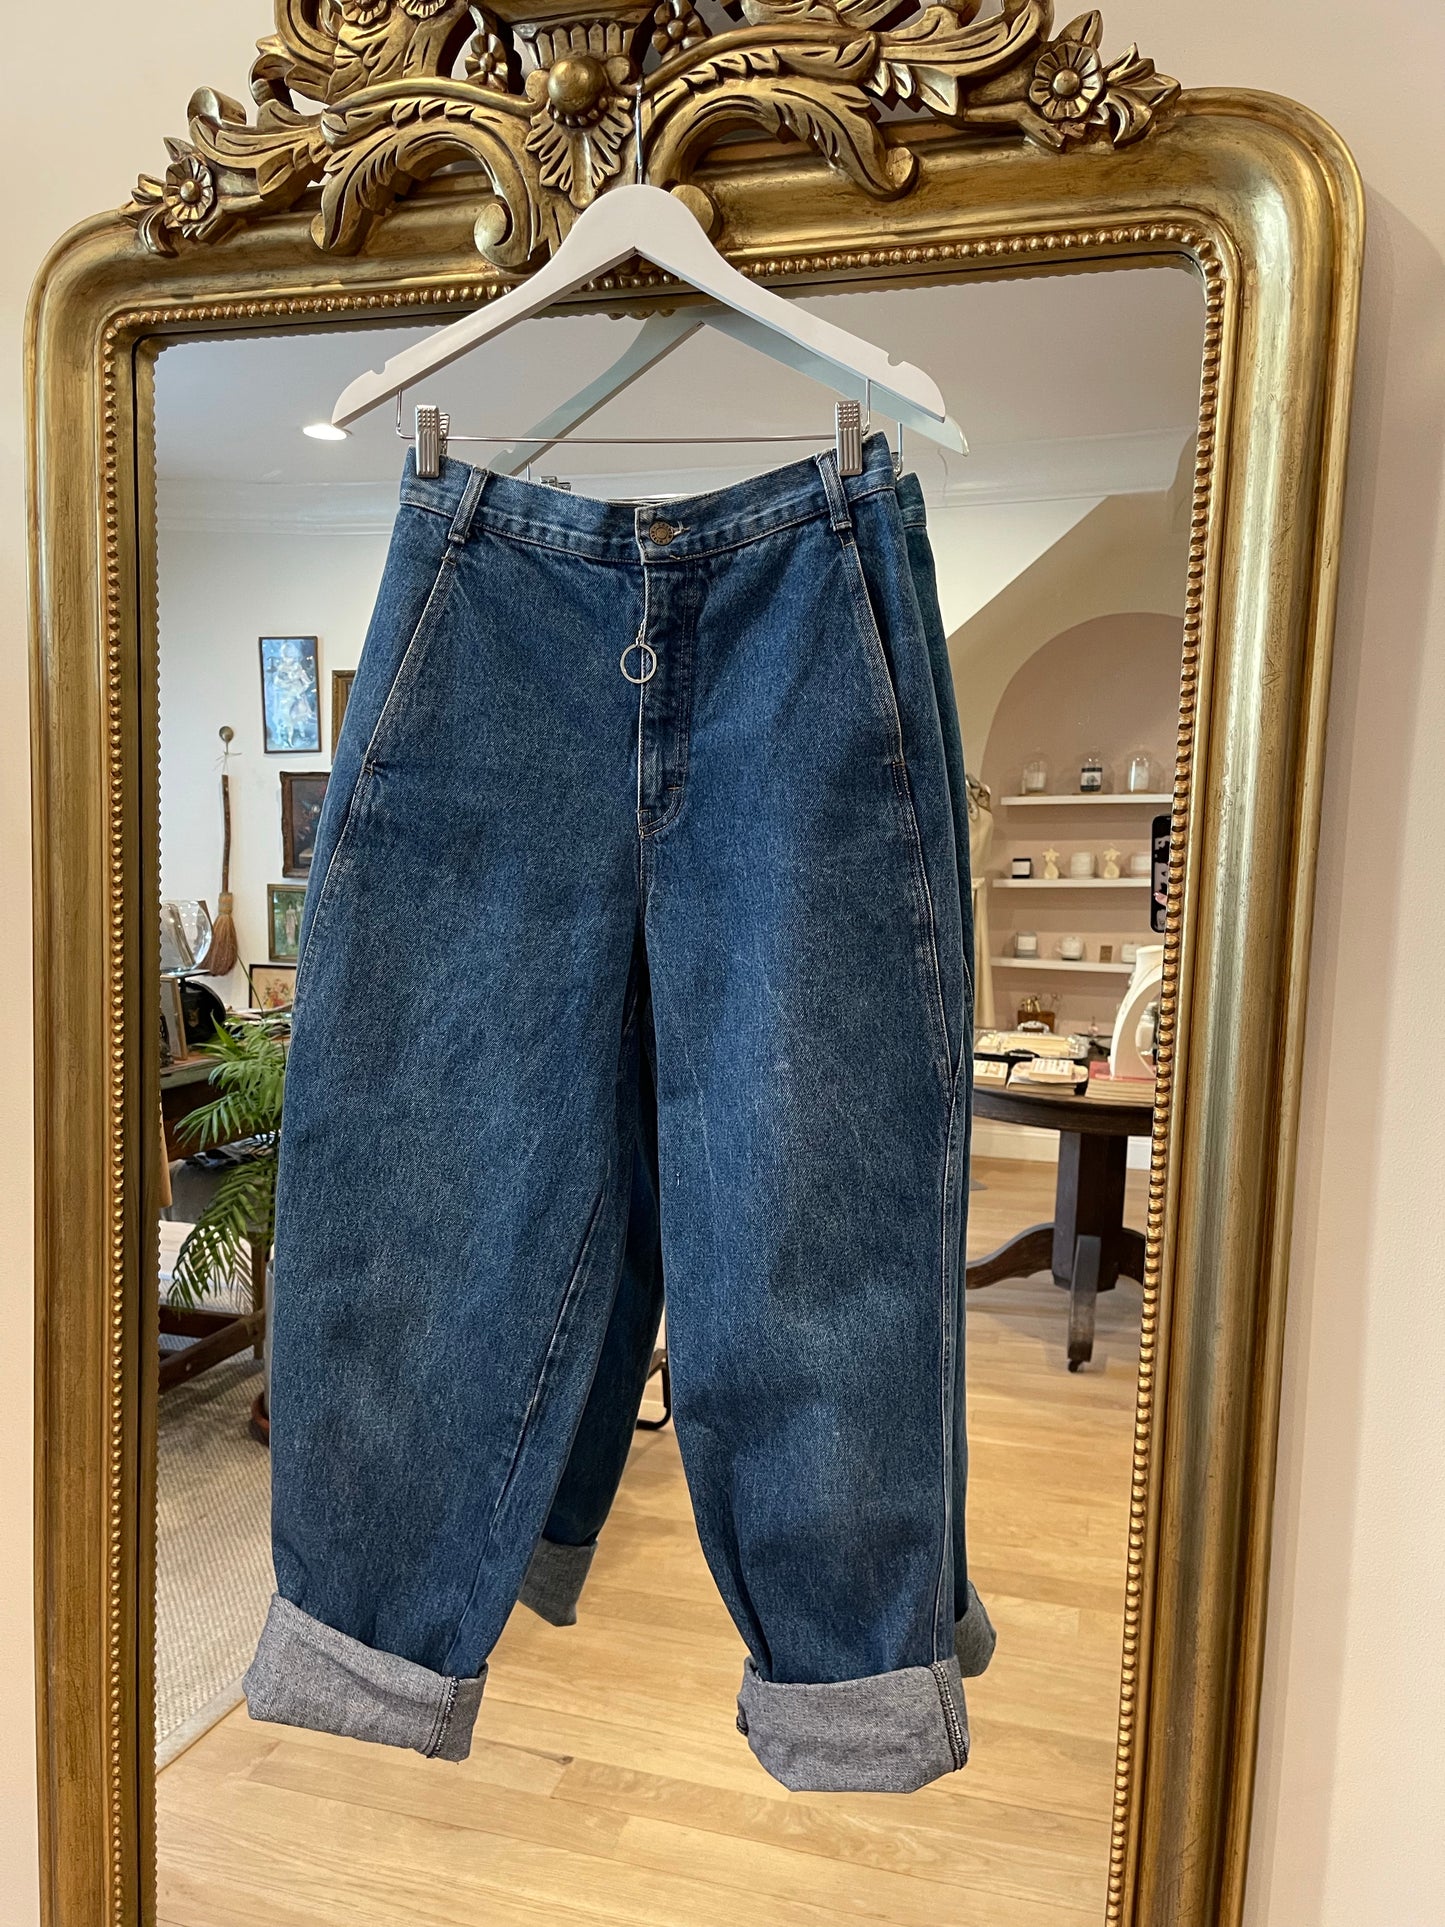 CK Jeans, 1980's